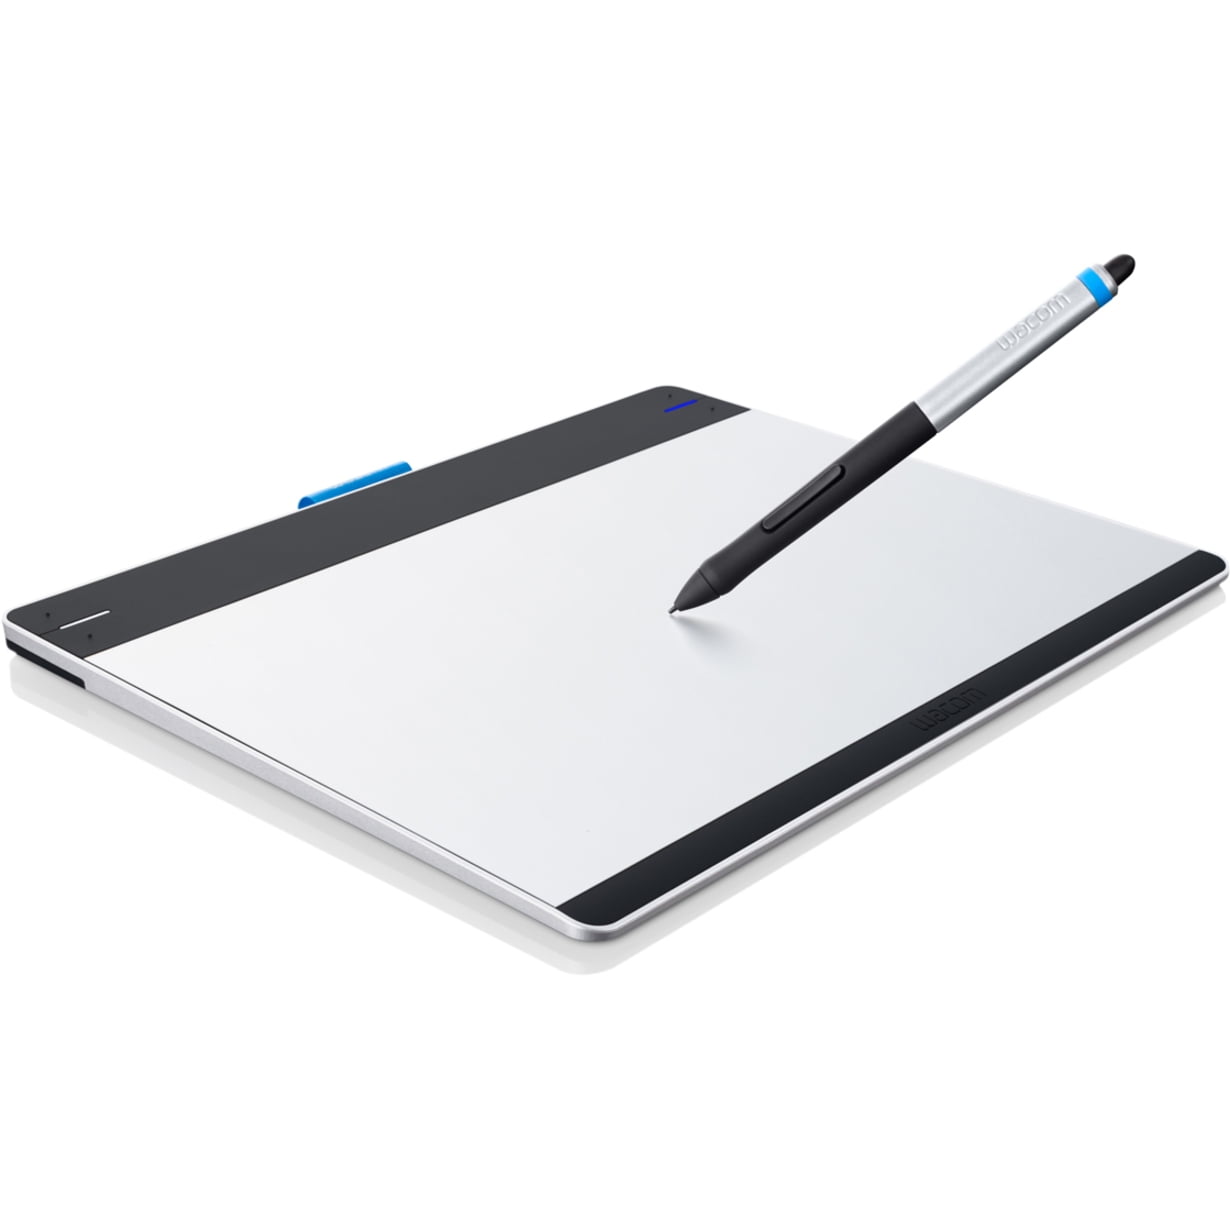 WACOM Intuos CTH-680/S1 Small Creative Pen Tablet Intuos Comic